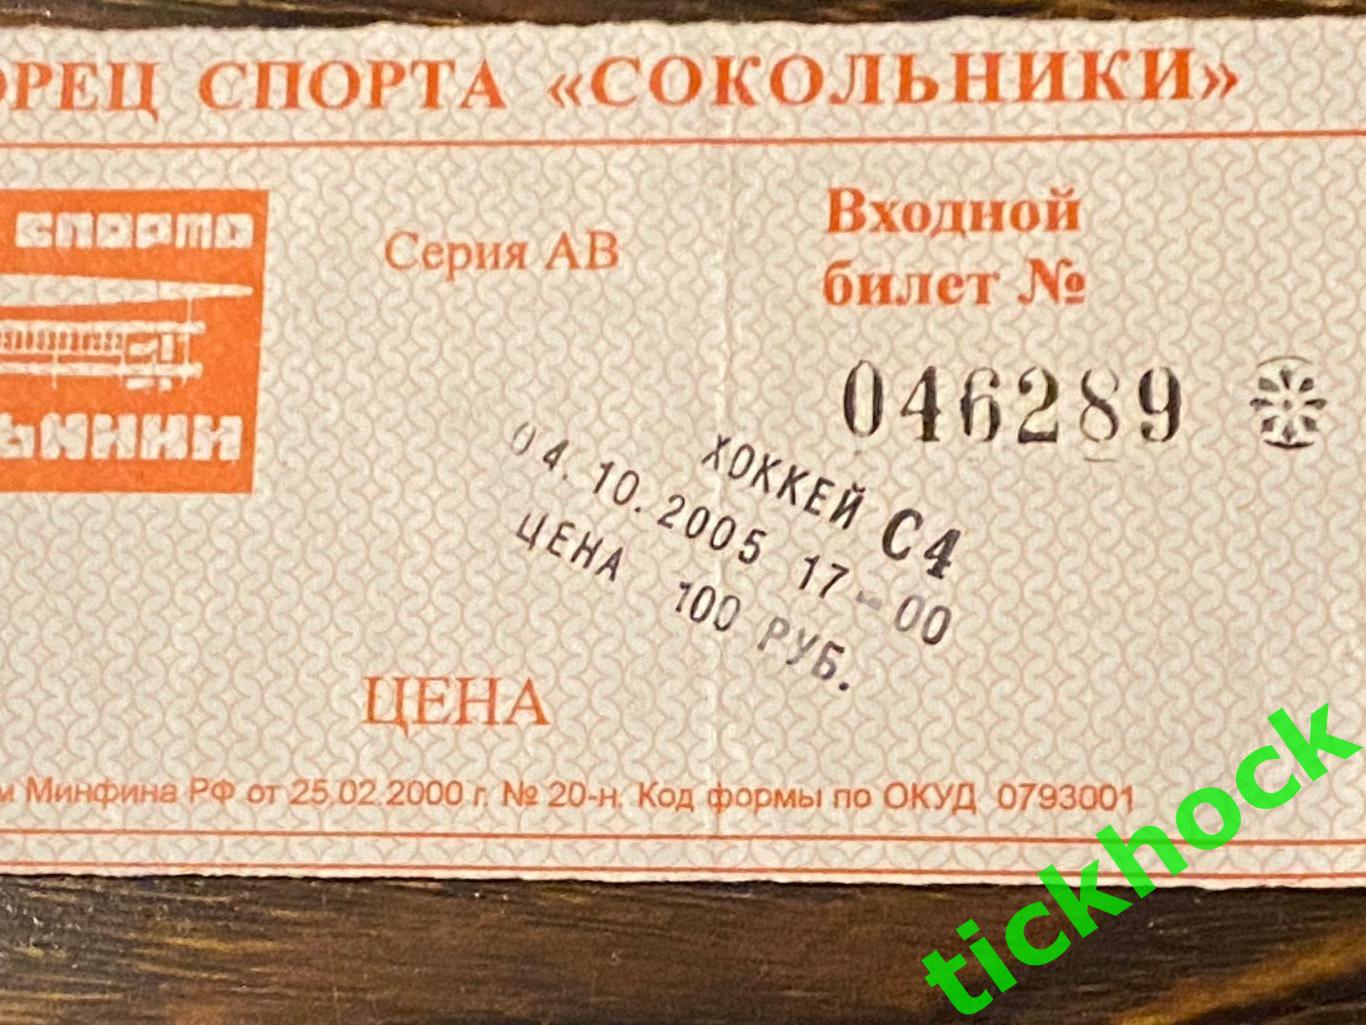 хоккей-- Спартак Москва - ХК МВД 04.10.2005 - SY 1